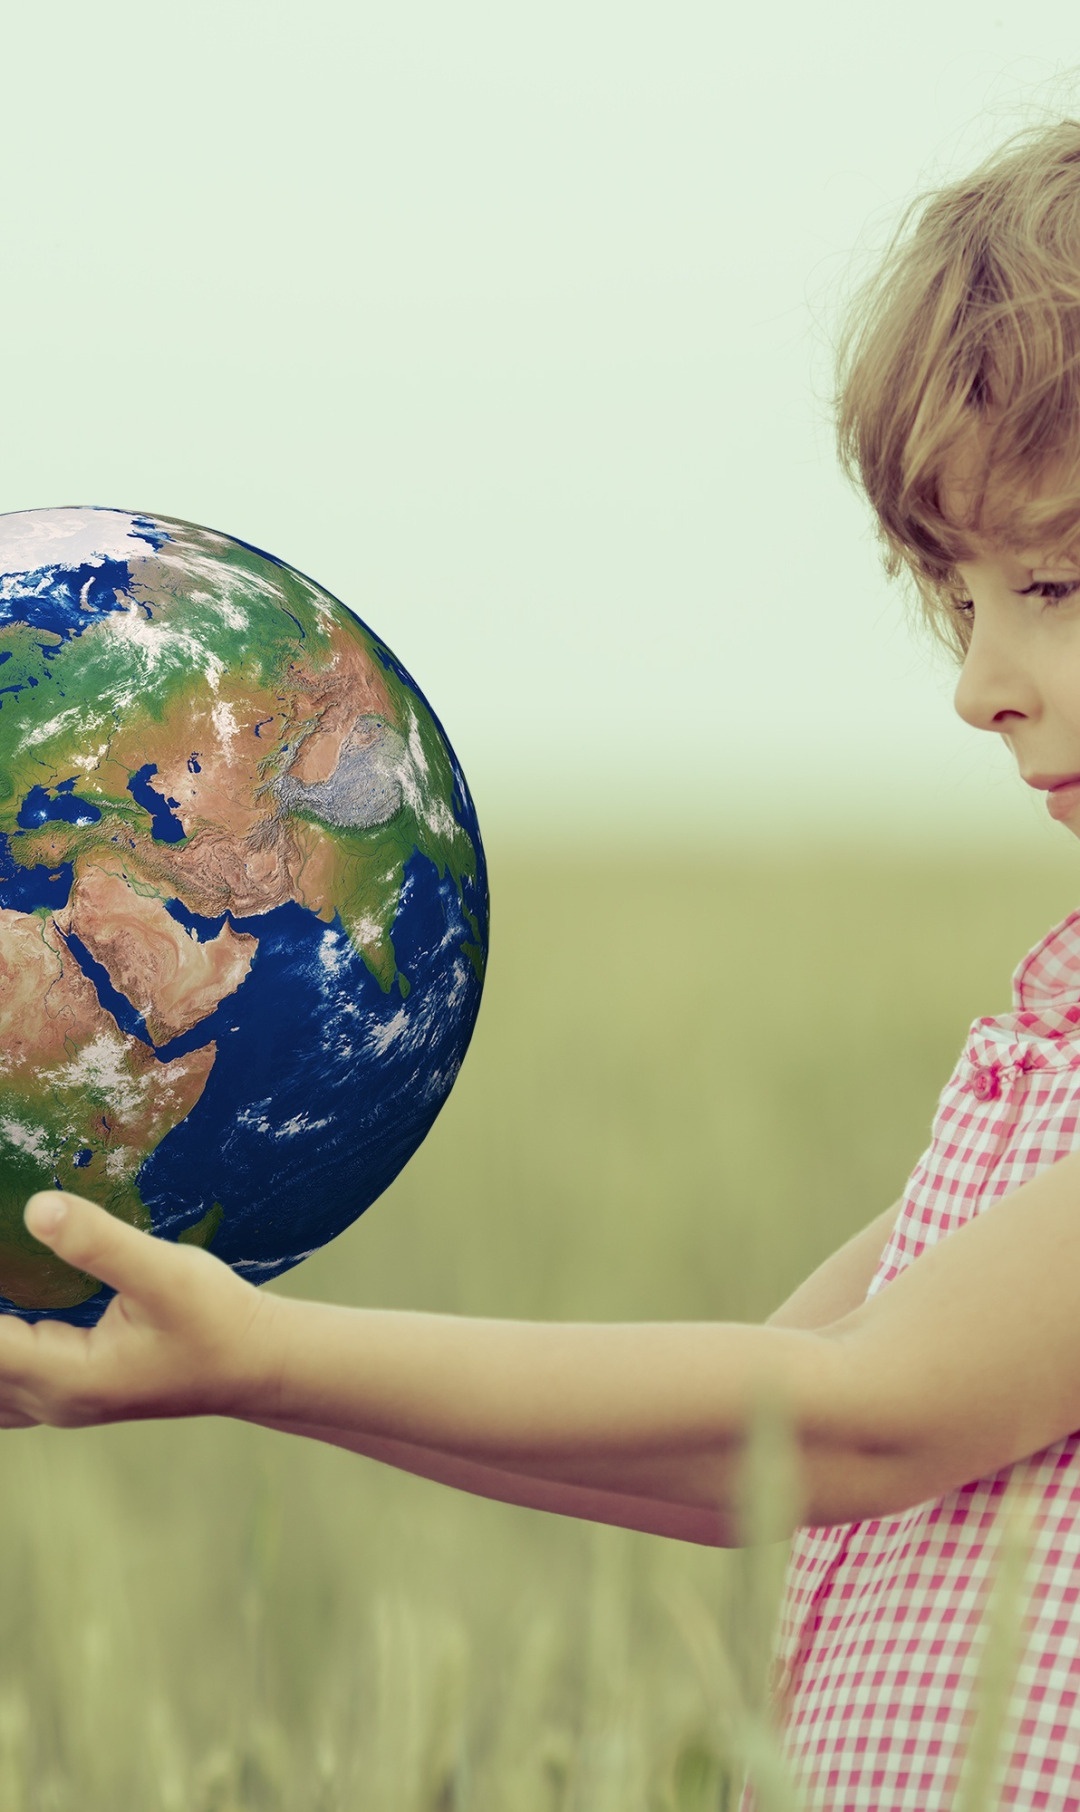 Earth child. Дети и природа. Дети земли. Ребенок познает мир. Девочка и земной шар.